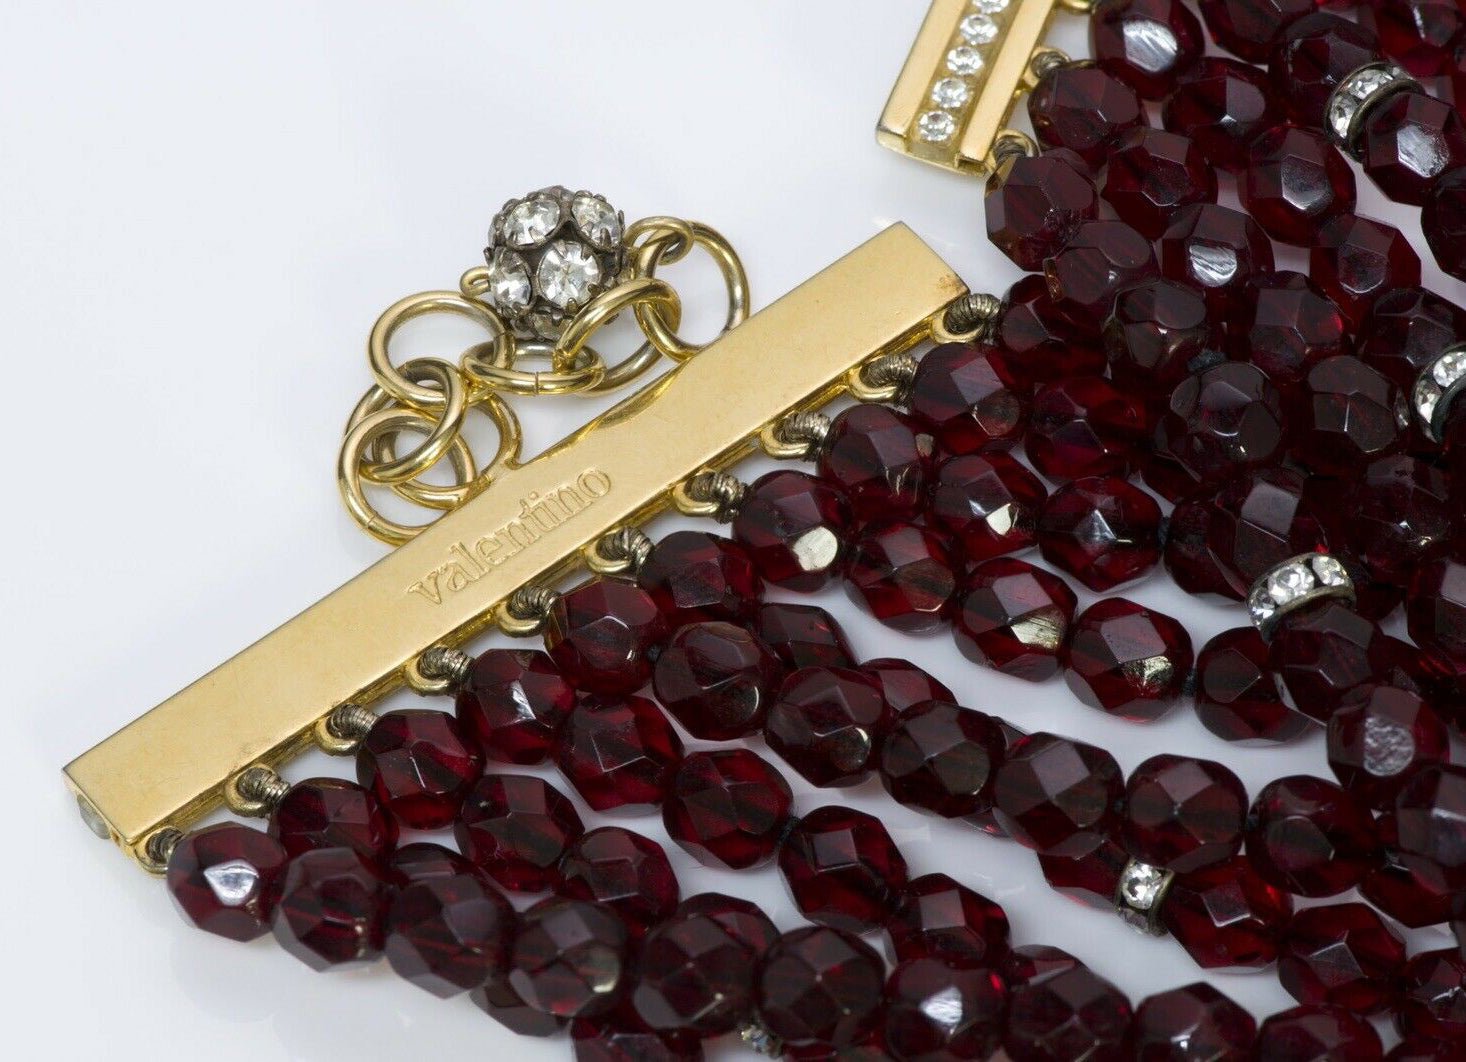 VALENTINO Garavani Red Beads Choker Necklace